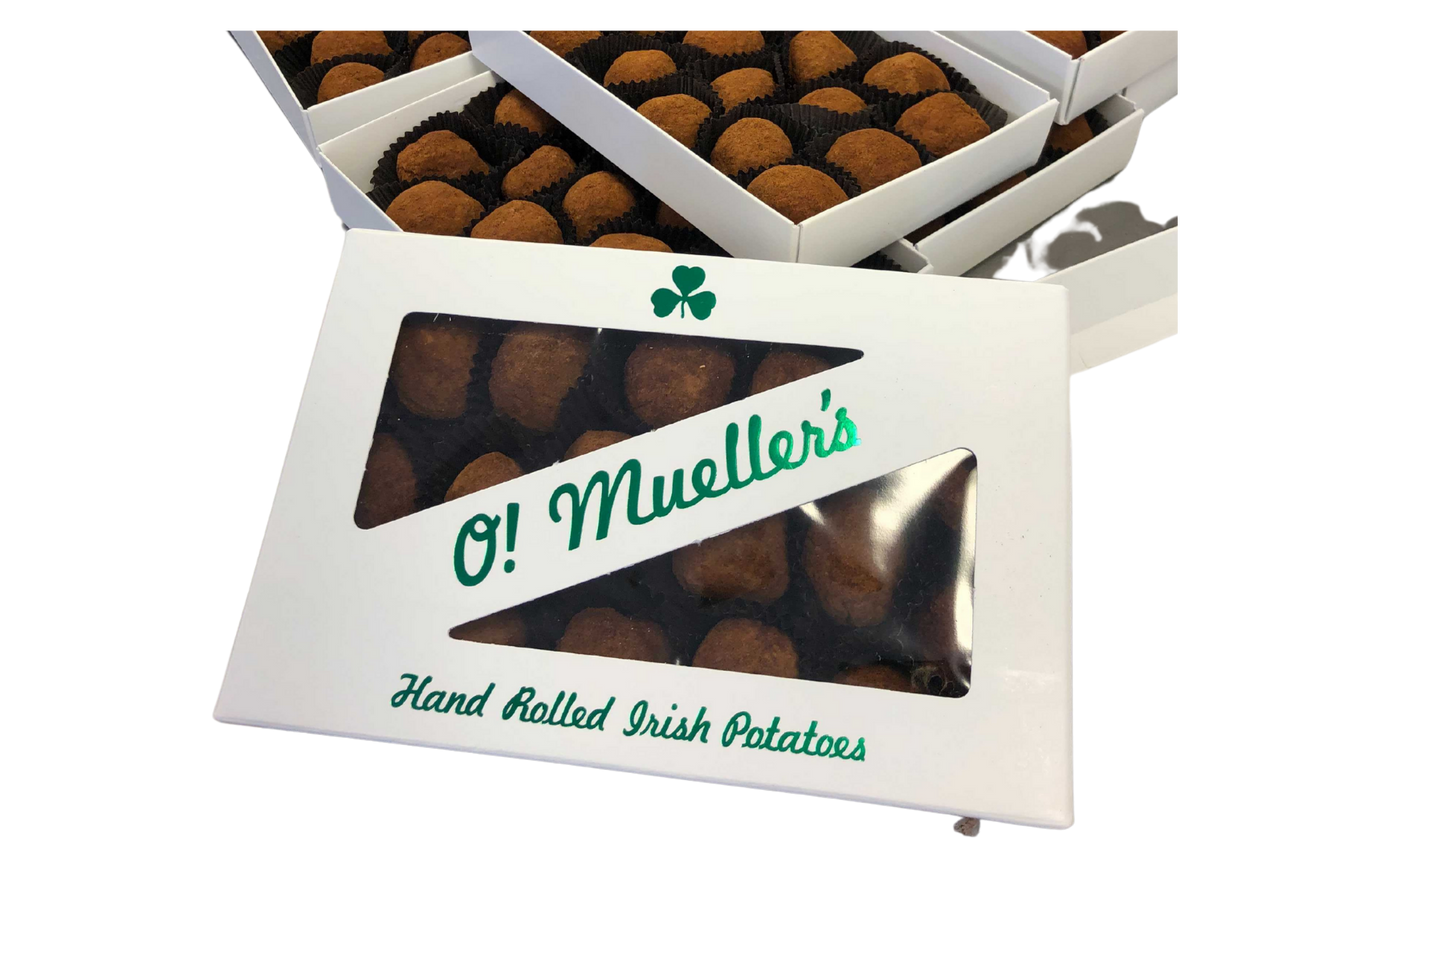 O! Mueller's Hand Rolled Irish Potatoes